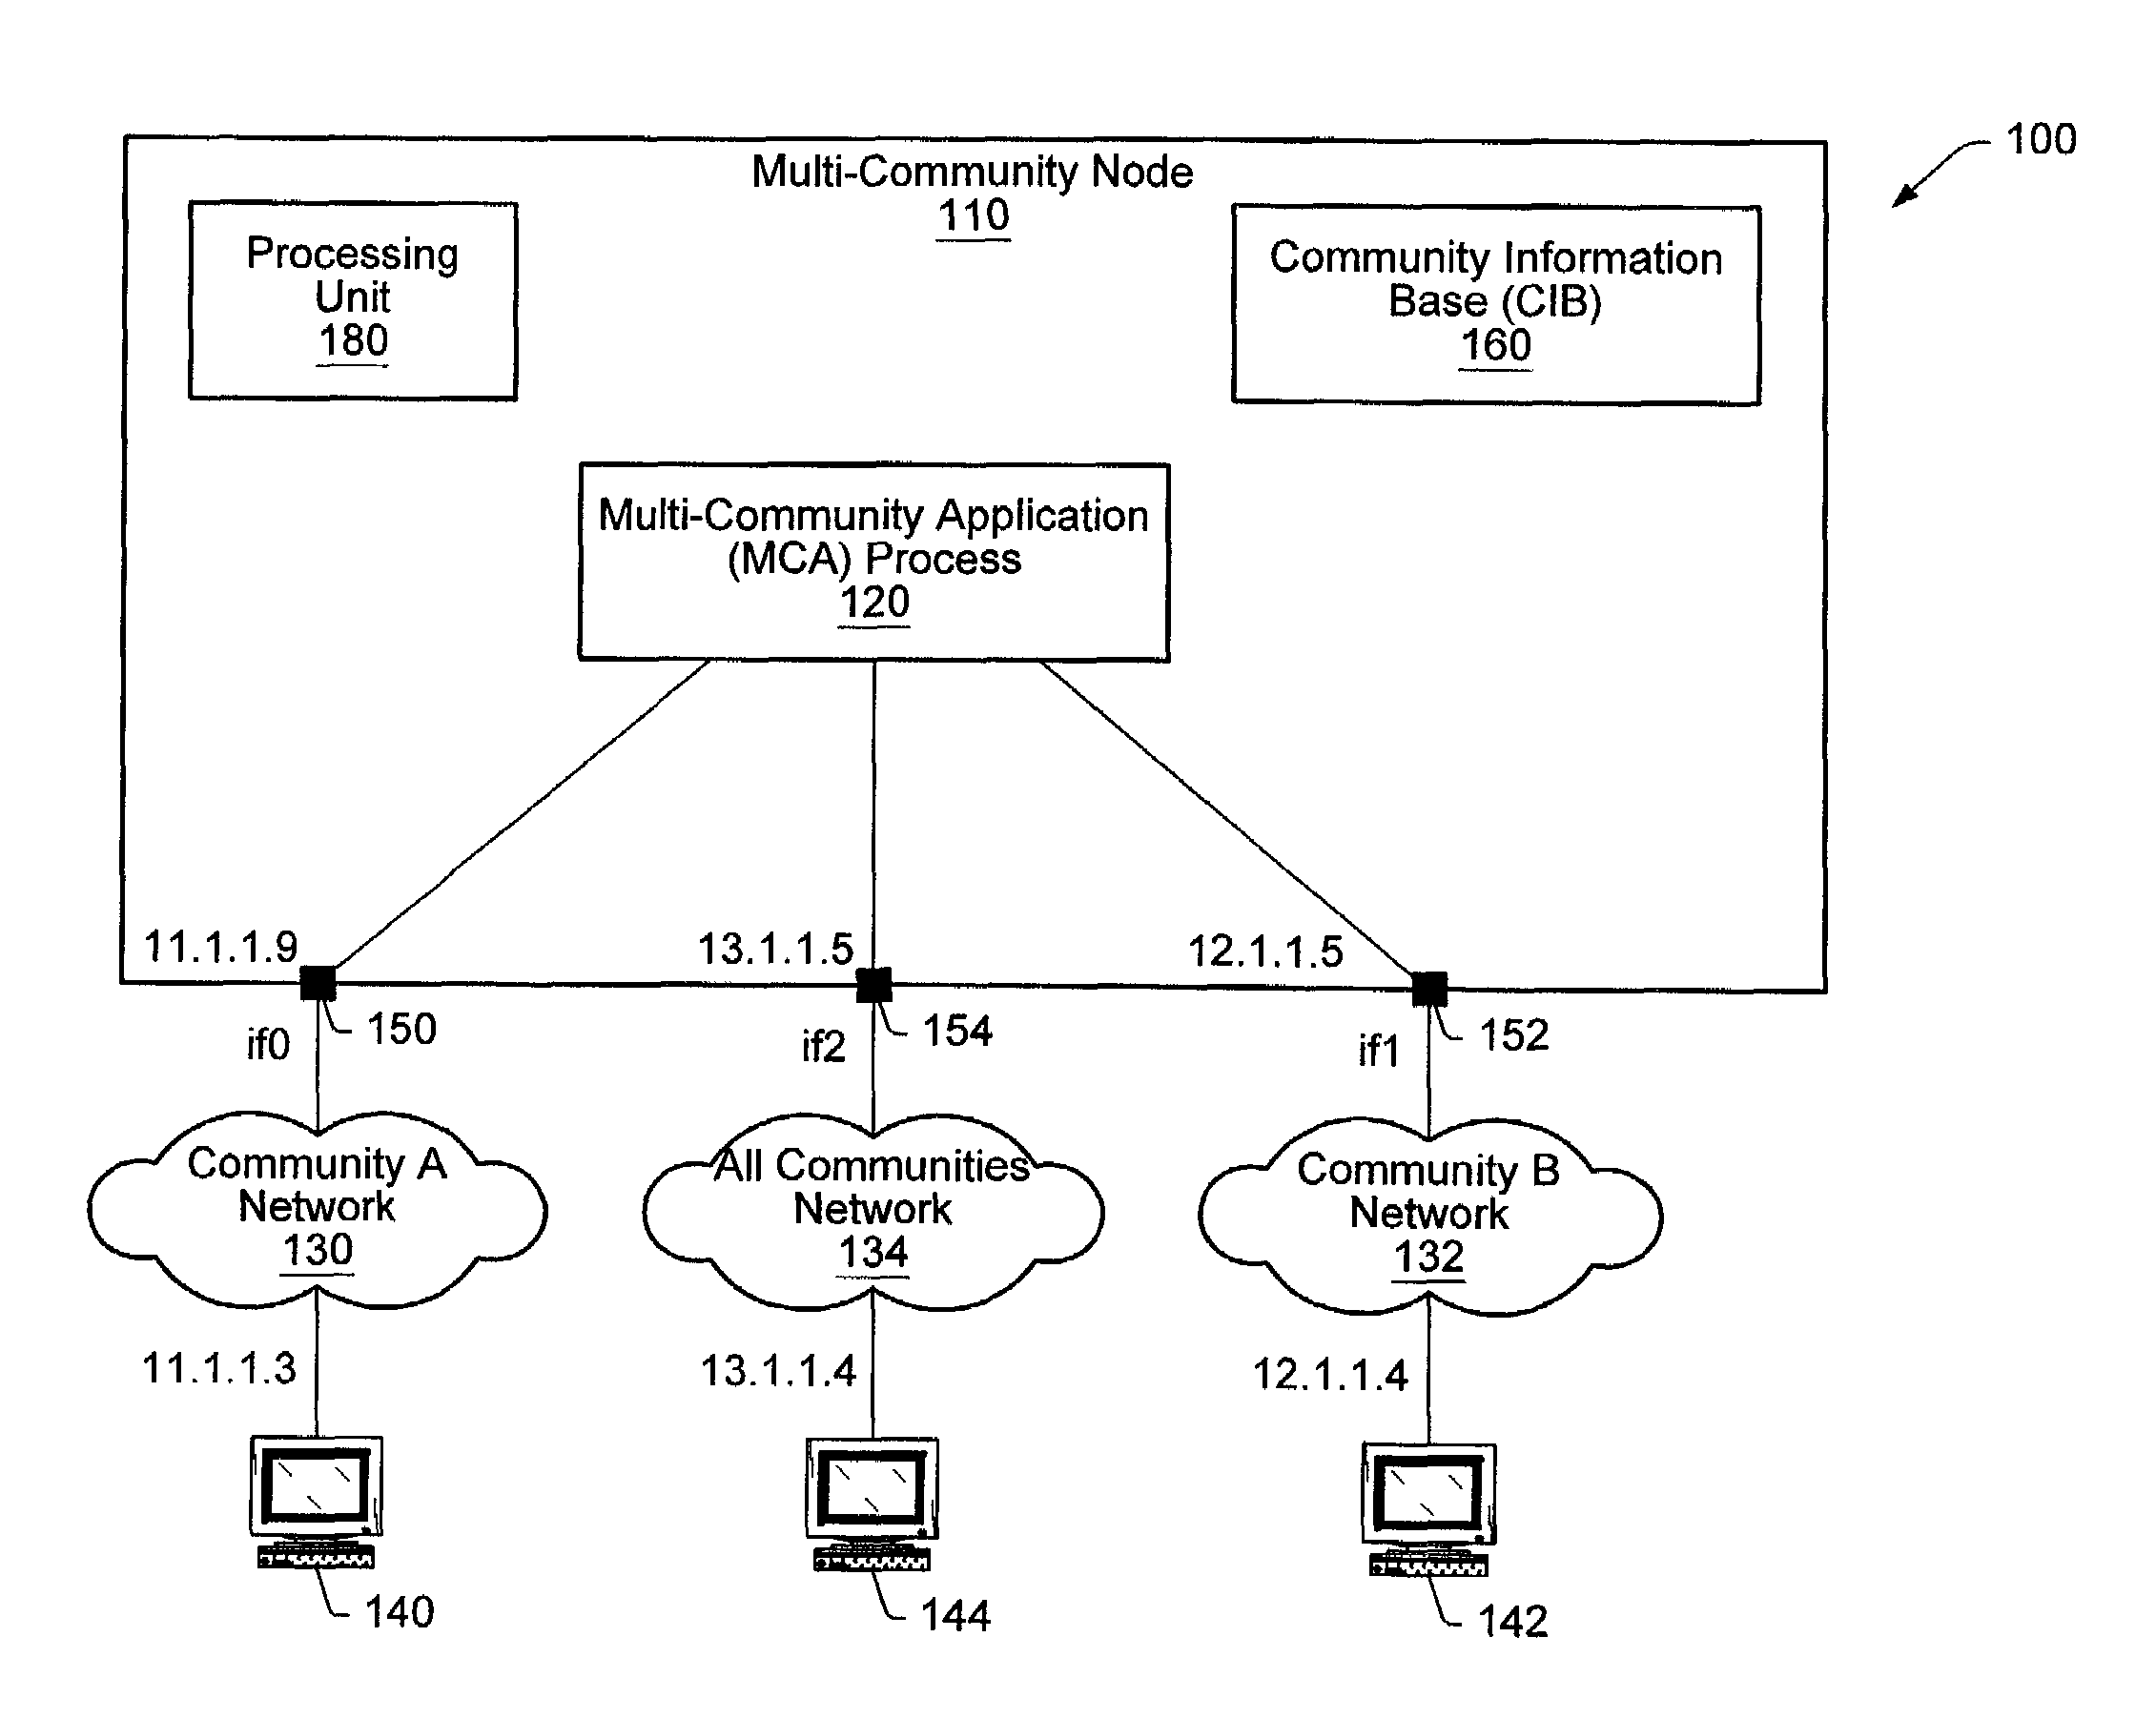 Community access control in a multi-community node